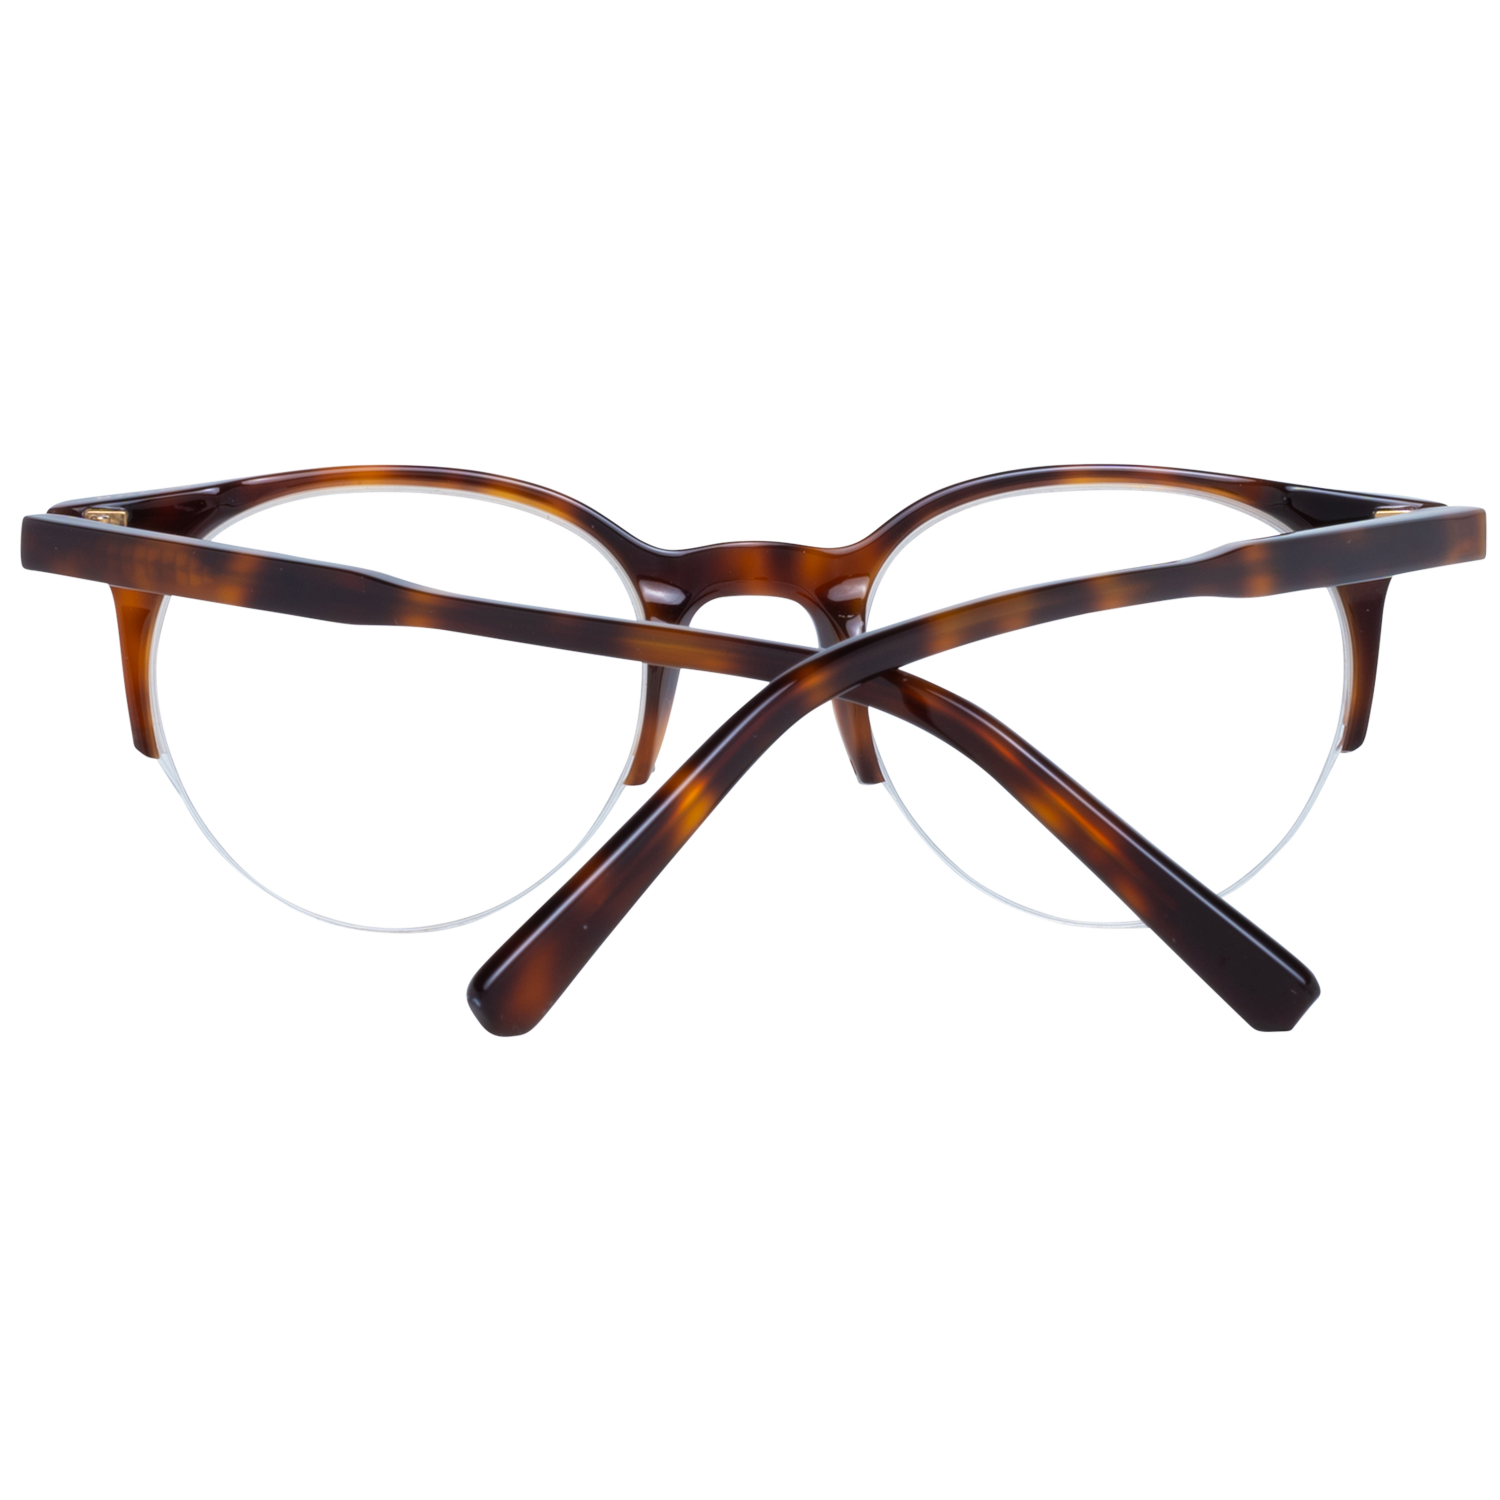 Bally Optical Frame Bally Eyeglasses Frames BY5018 052 47 Eyeglasses Eyewear UK USA Australia 